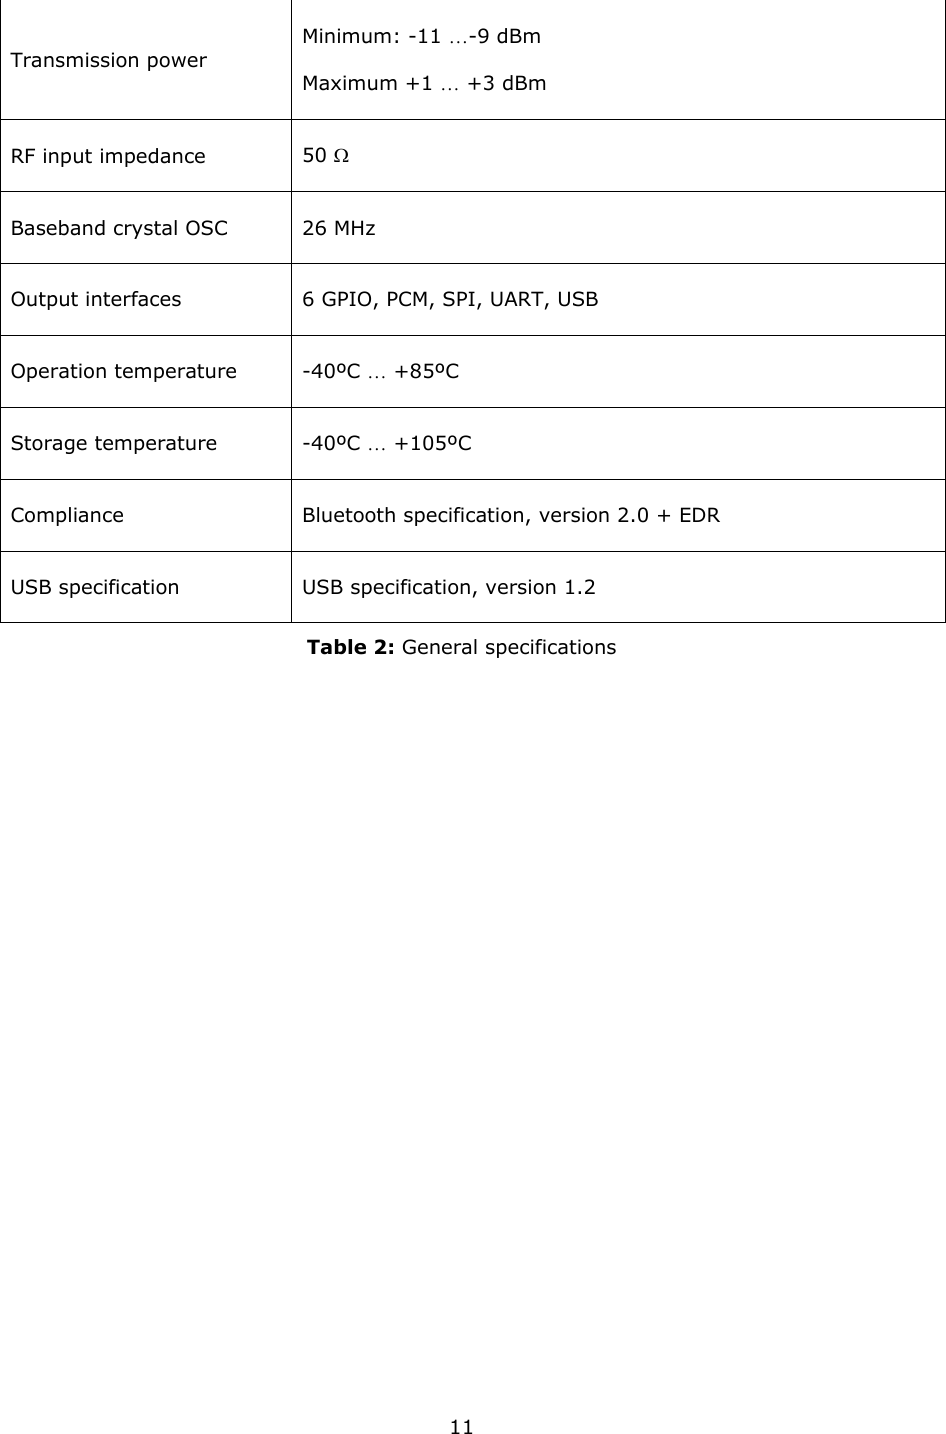   11Transmission power Minimum: -11 …-9 dBm Maximum +1 … +3 dBm RF input impedance  50 Ω Baseband crystal OSC  26 MHz Output interfaces  6 GPIO, PCM, SPI, UART, USB Operation temperature  -40ºC … +85ºC Storage temperature  -40ºC … +105ºC Compliance  Bluetooth specification, version 2.0 + EDR USB specification  USB specification, version 1.2 Table 2: General specifications  